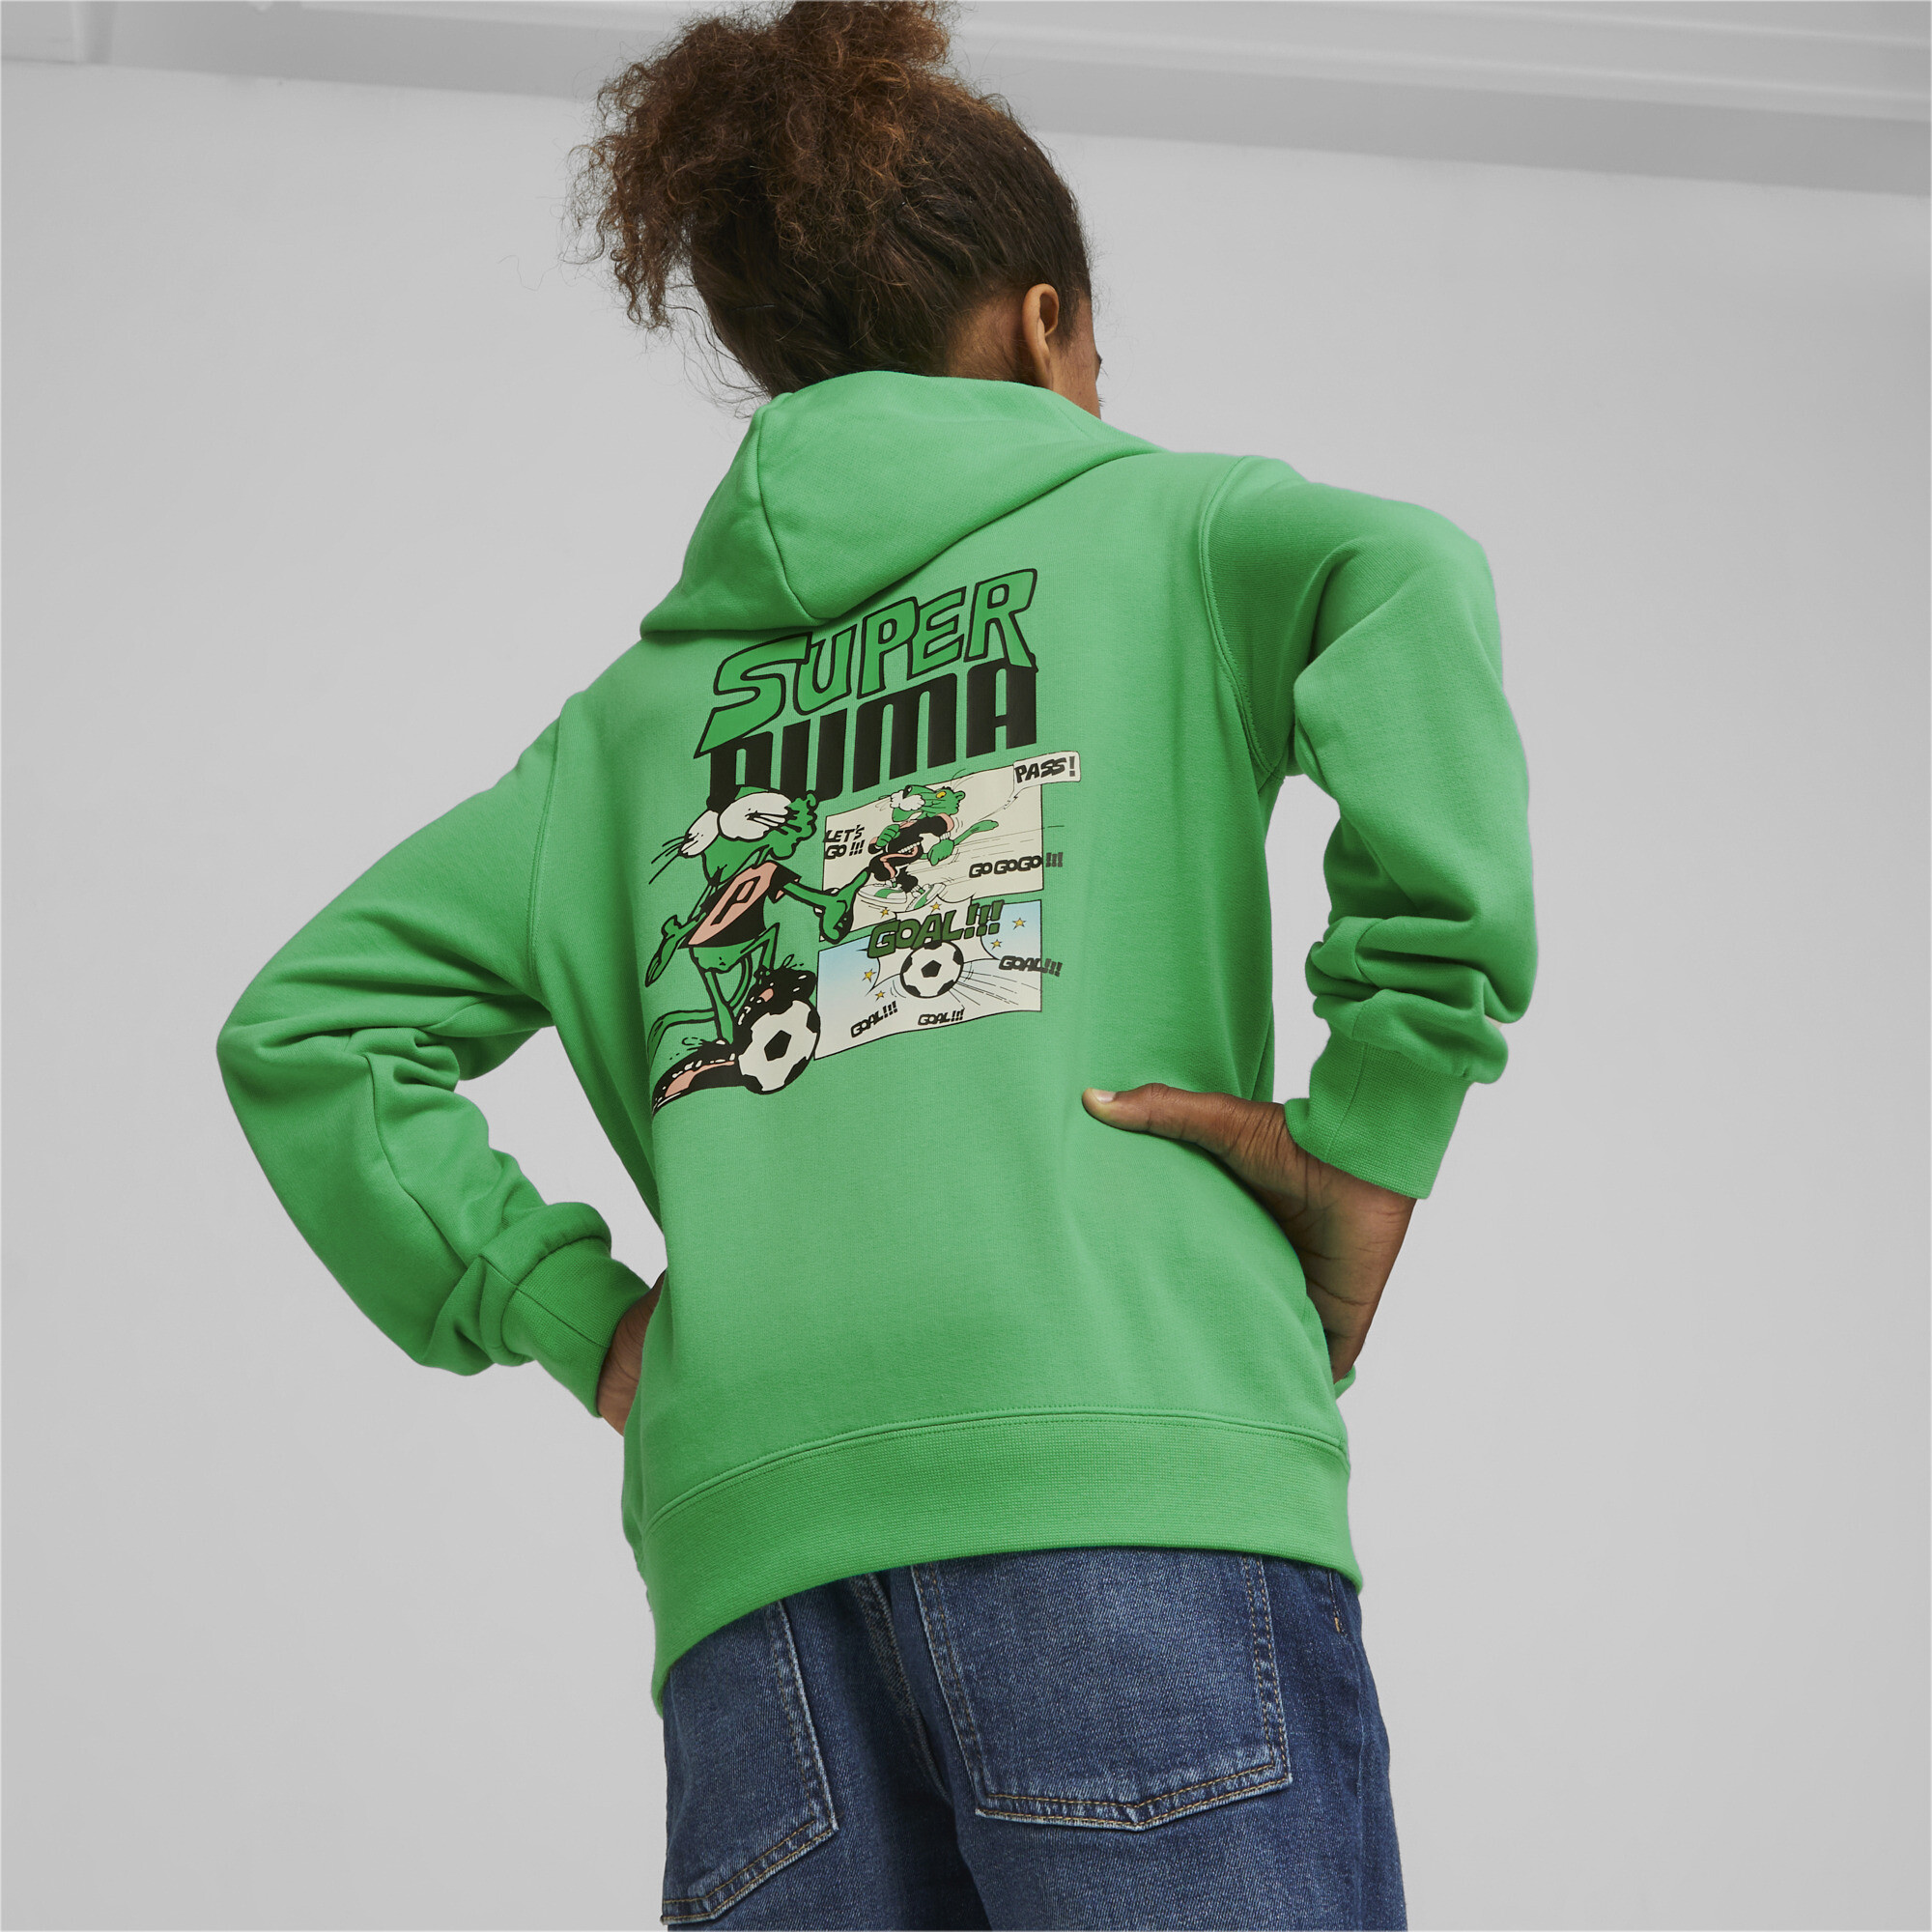 Classics SUPER PUMA Hoodie In Green, Size 9-10 Youth